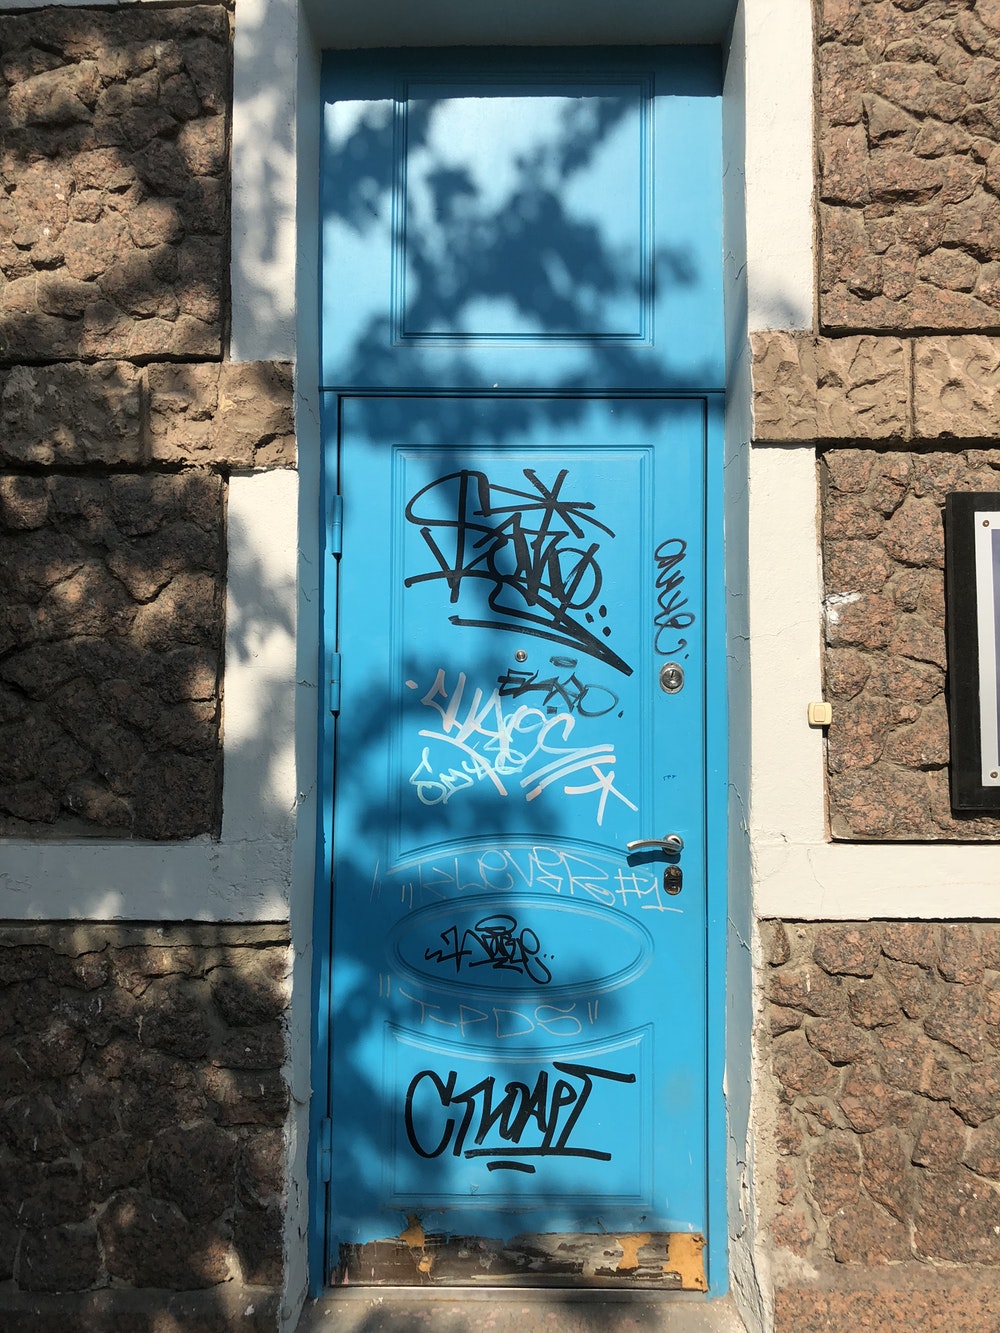 graffiti images